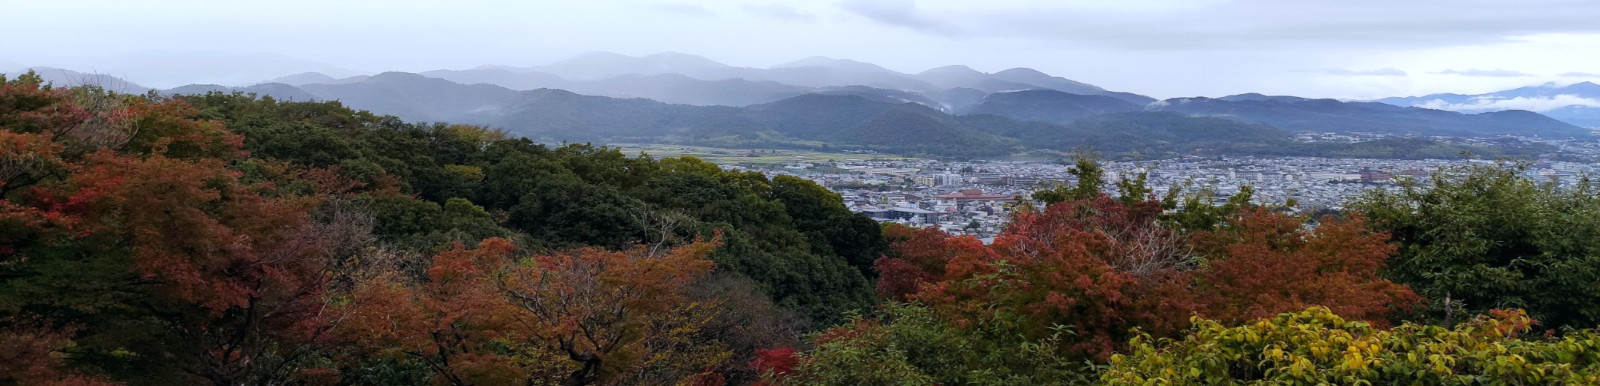 Mountain range behind trees in Kyoto.